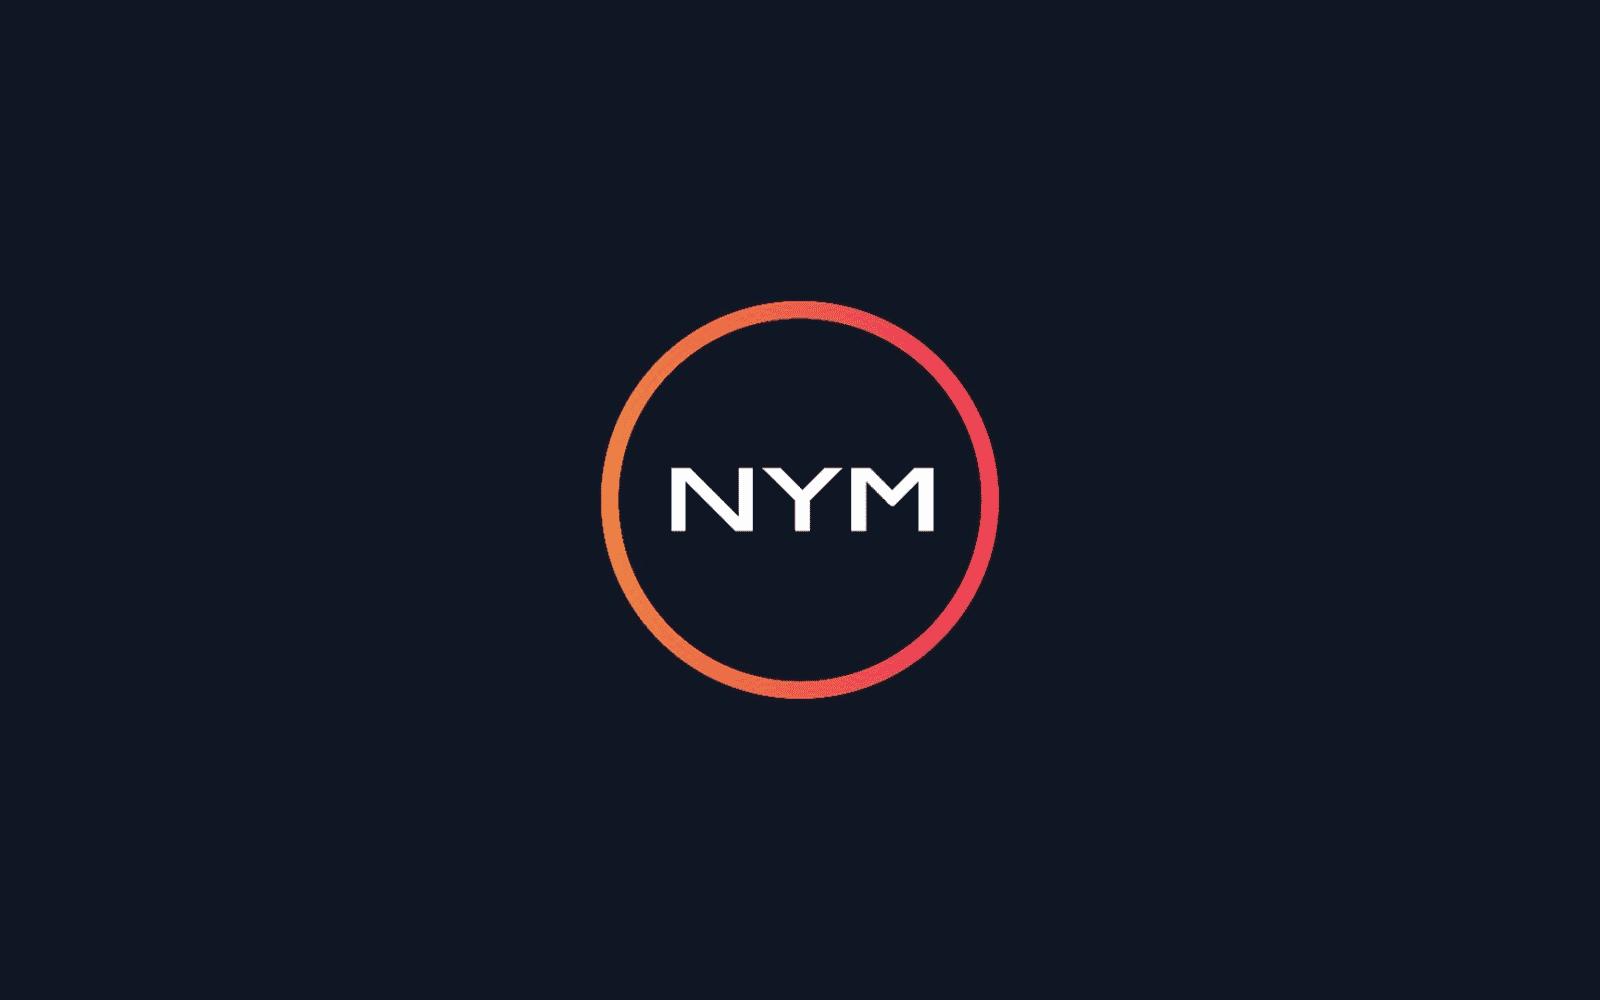 nym logo crypto